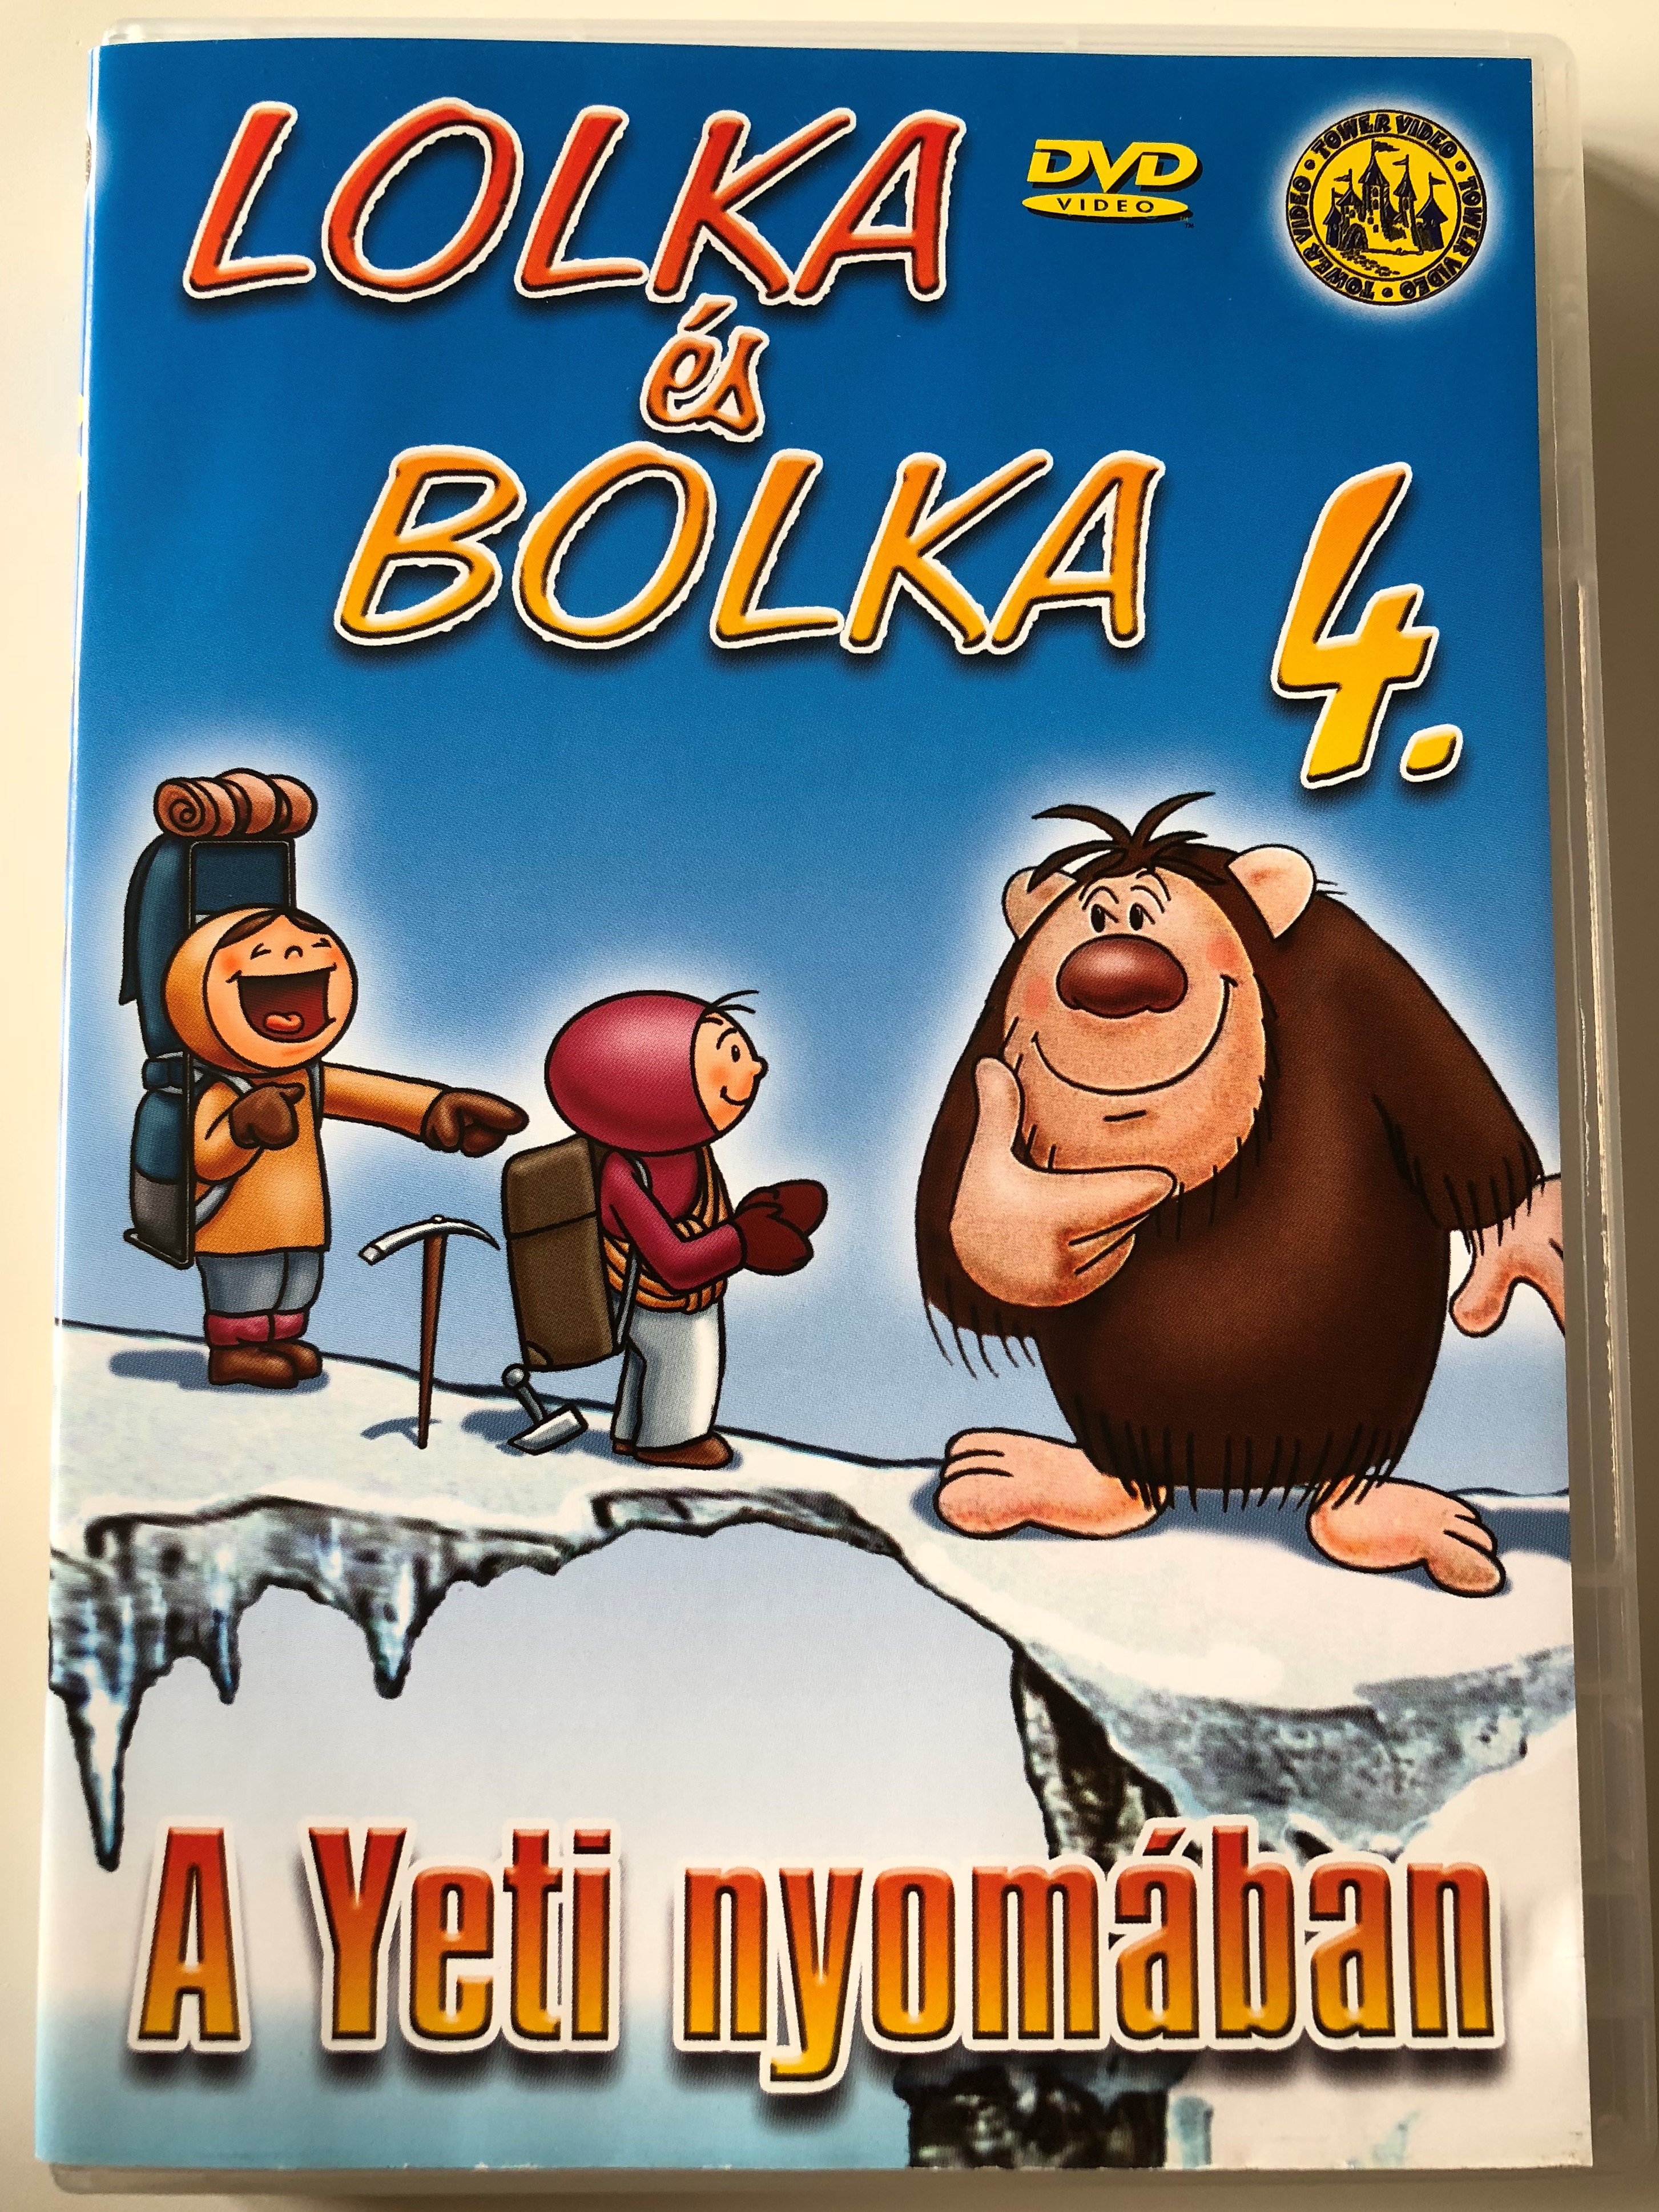 lolka-s-bolka-4.-a-yeti-nyom-ban-dvd-bolek-i-lolek-4.-yeti-created-by-wladyslaw-nehrebecki-classic-polish-cartoon-1-.jpg